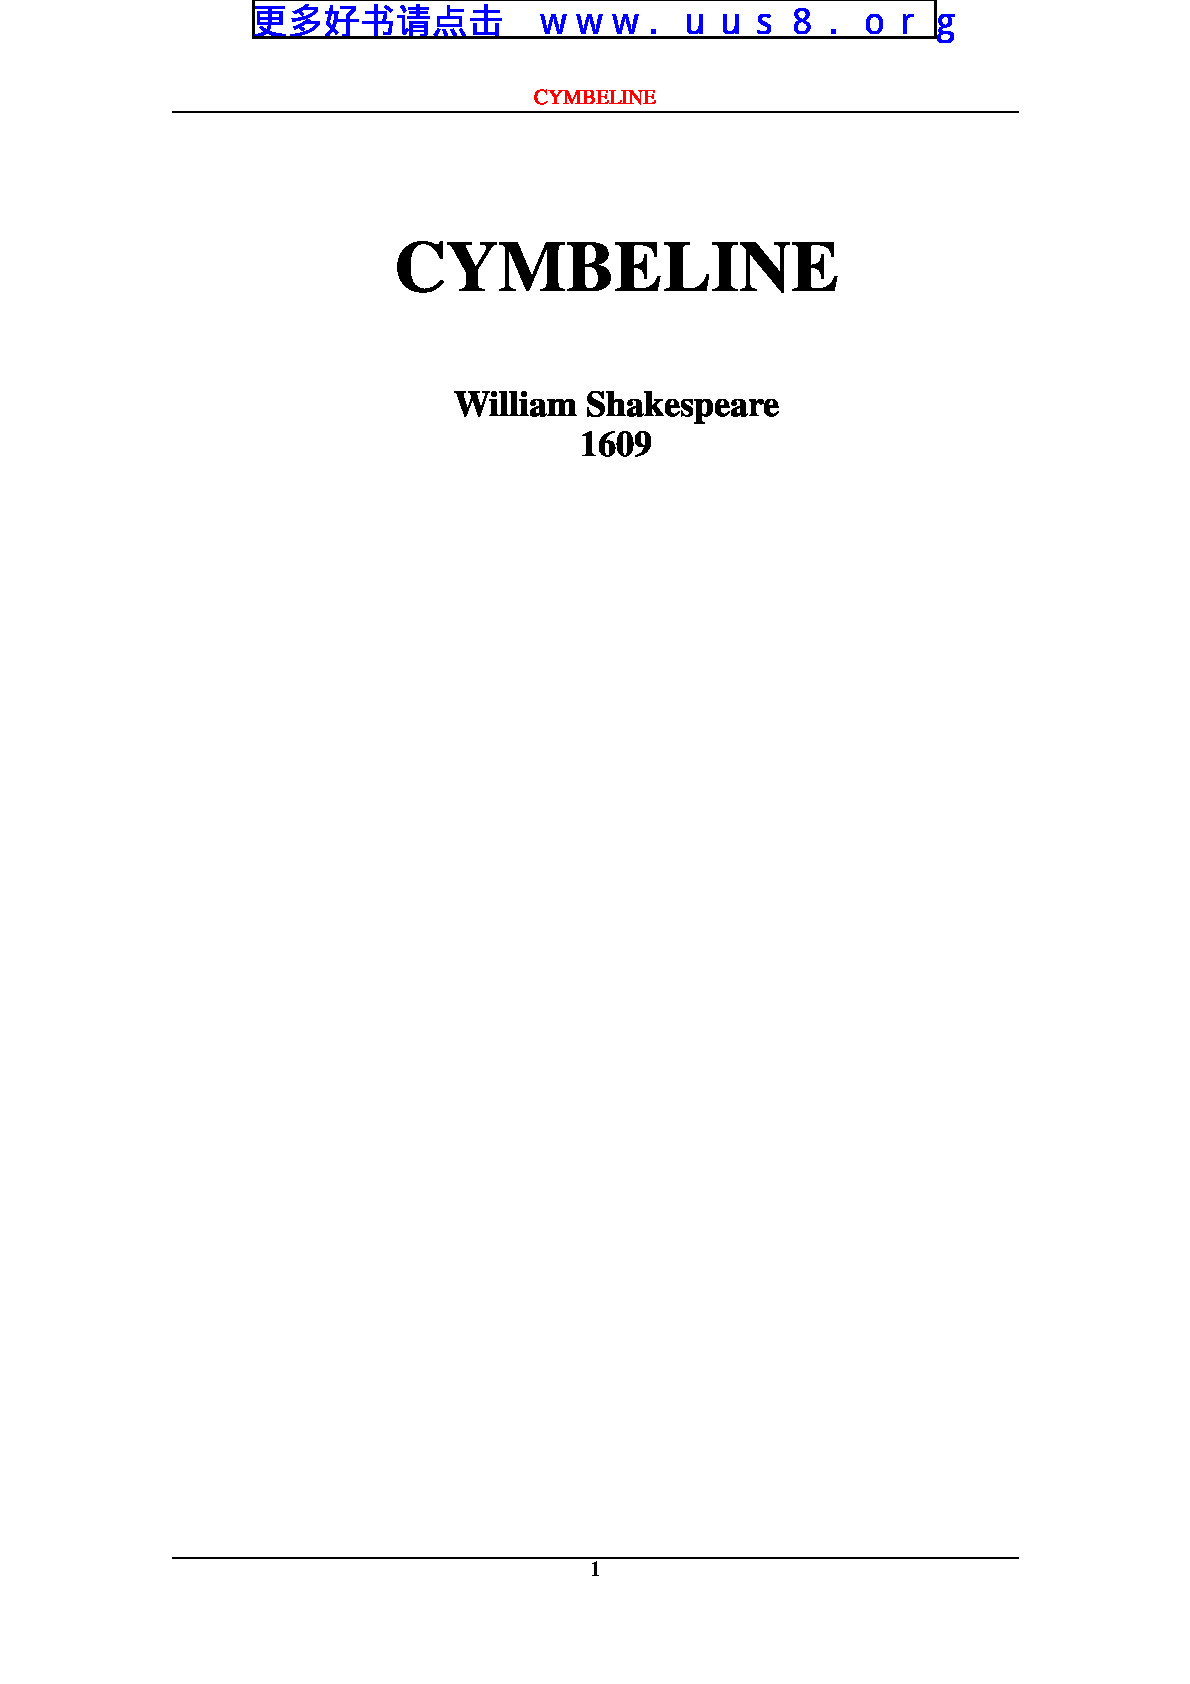 Cymbeline(辛白林)